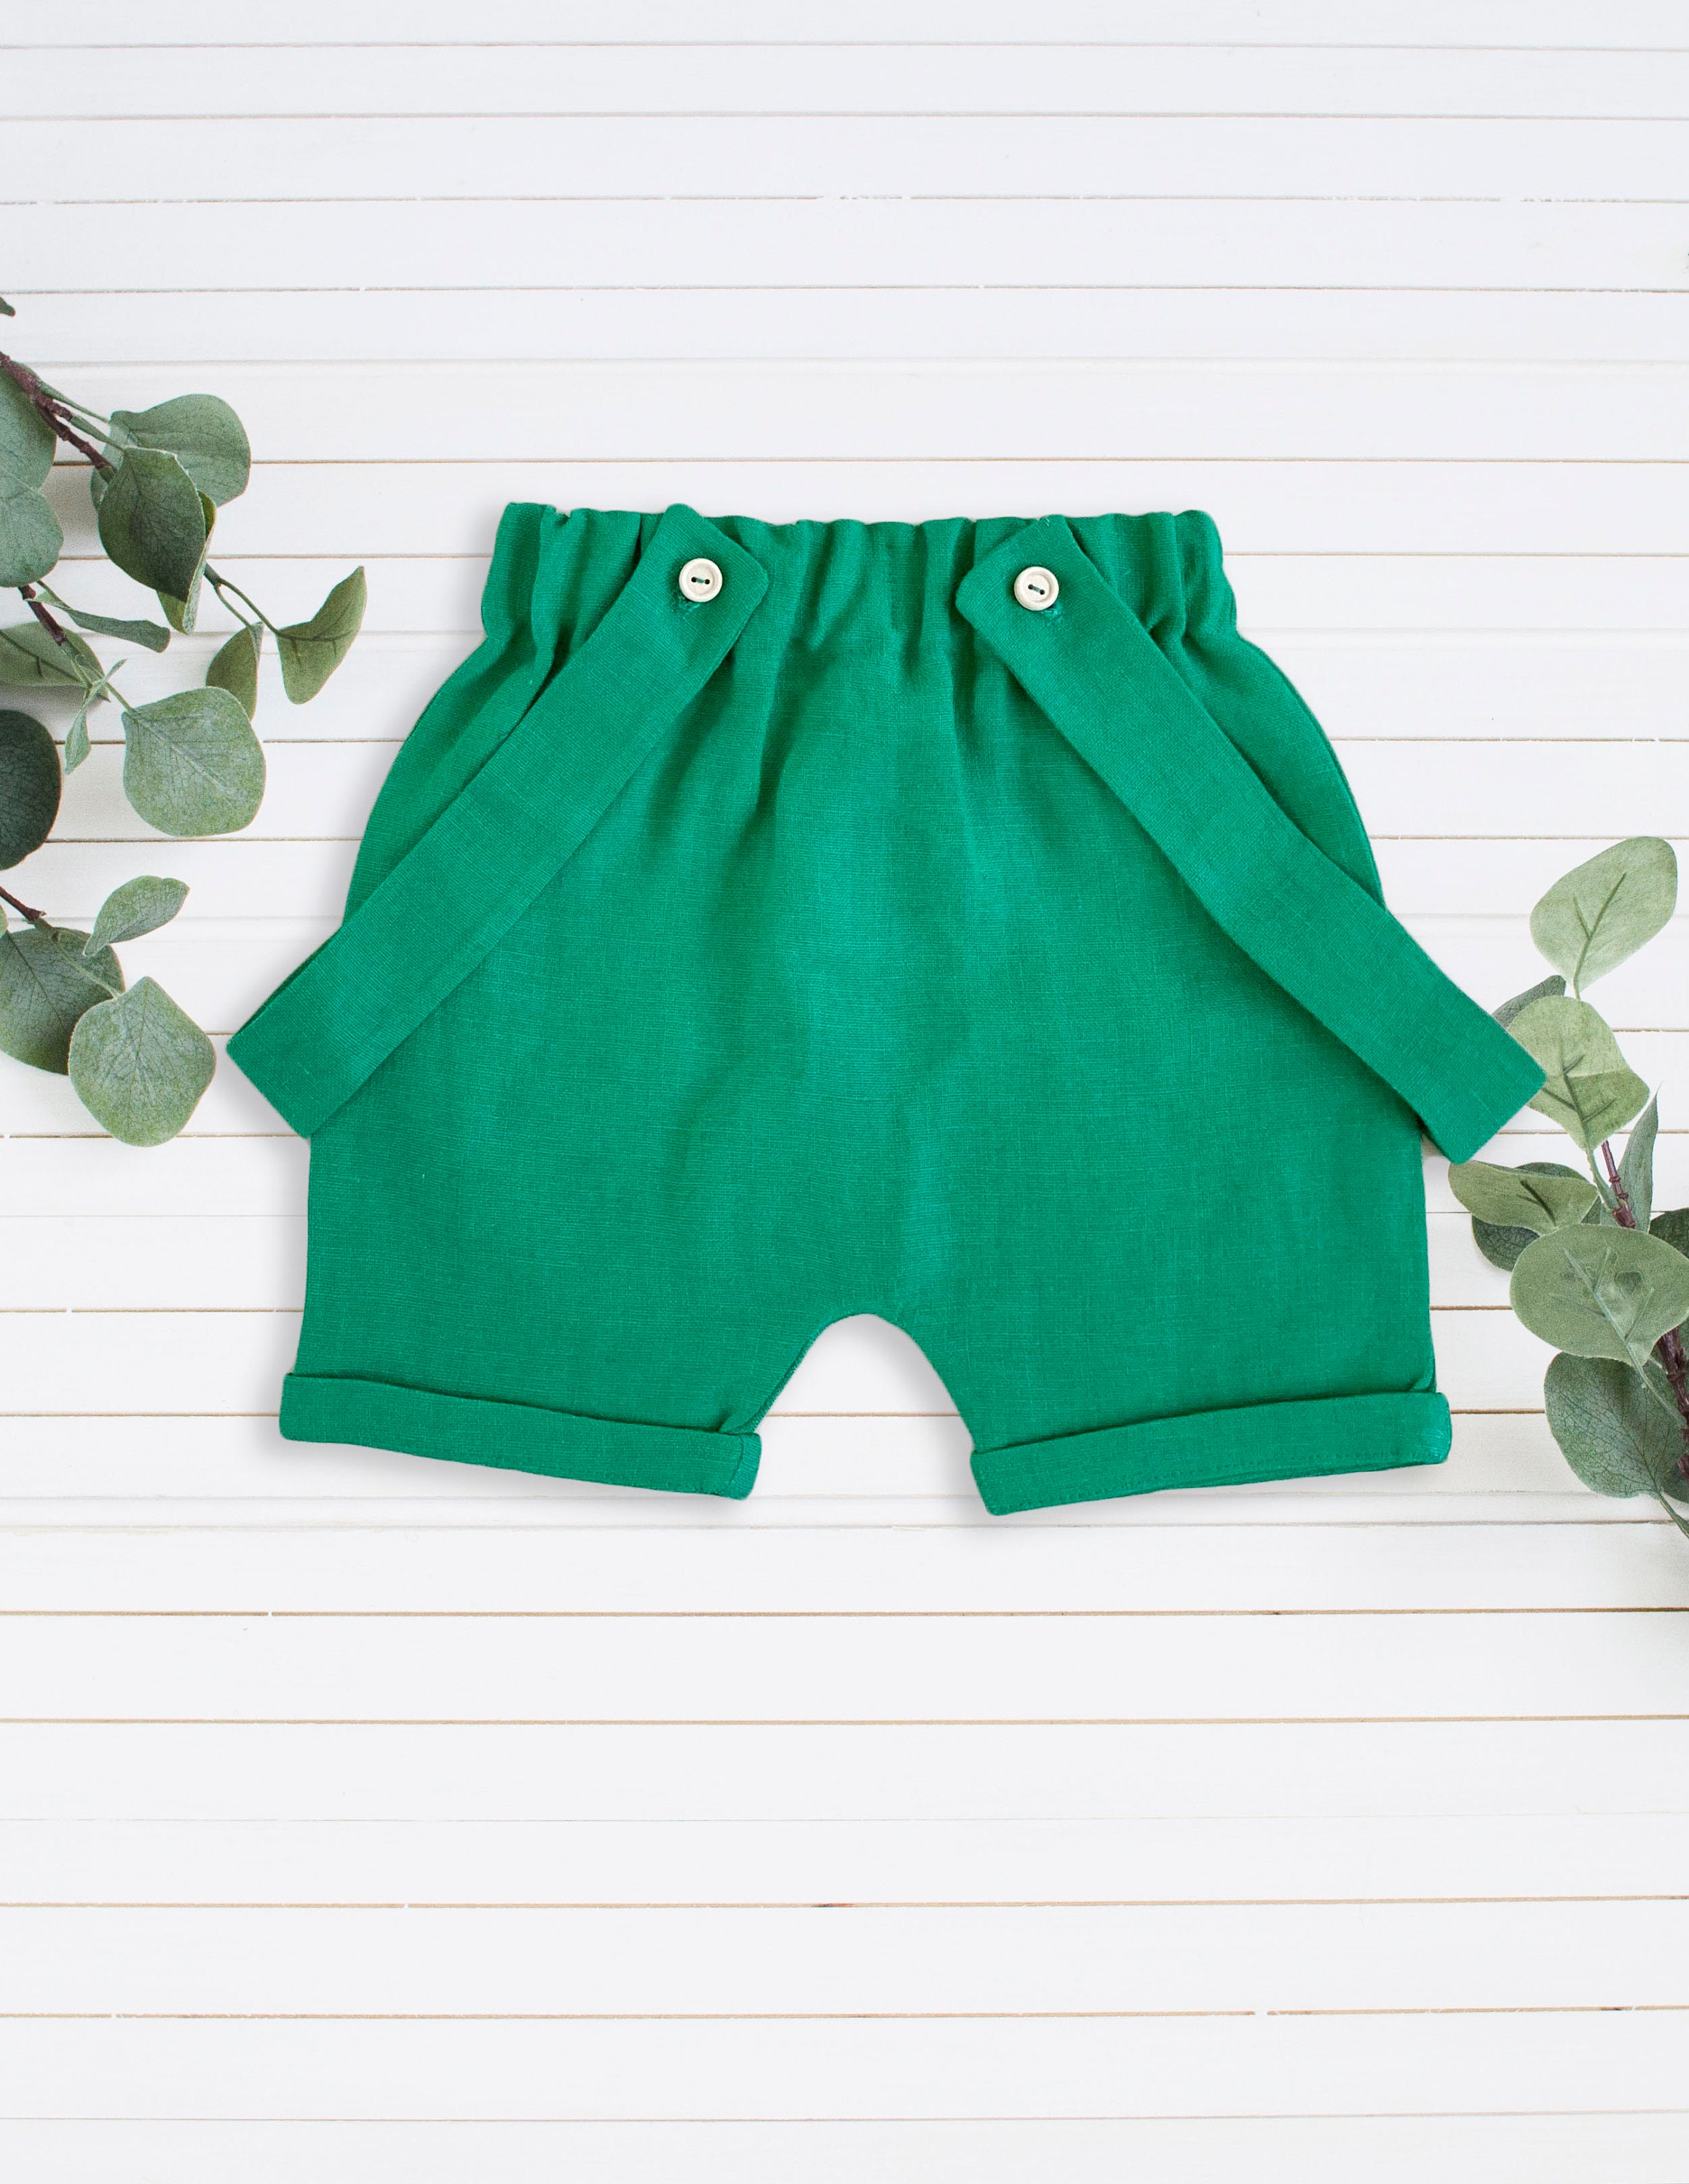 Fepege Toddler Girl Summer Cotton Linen Shorts Solid Color Short Pants with Belt 